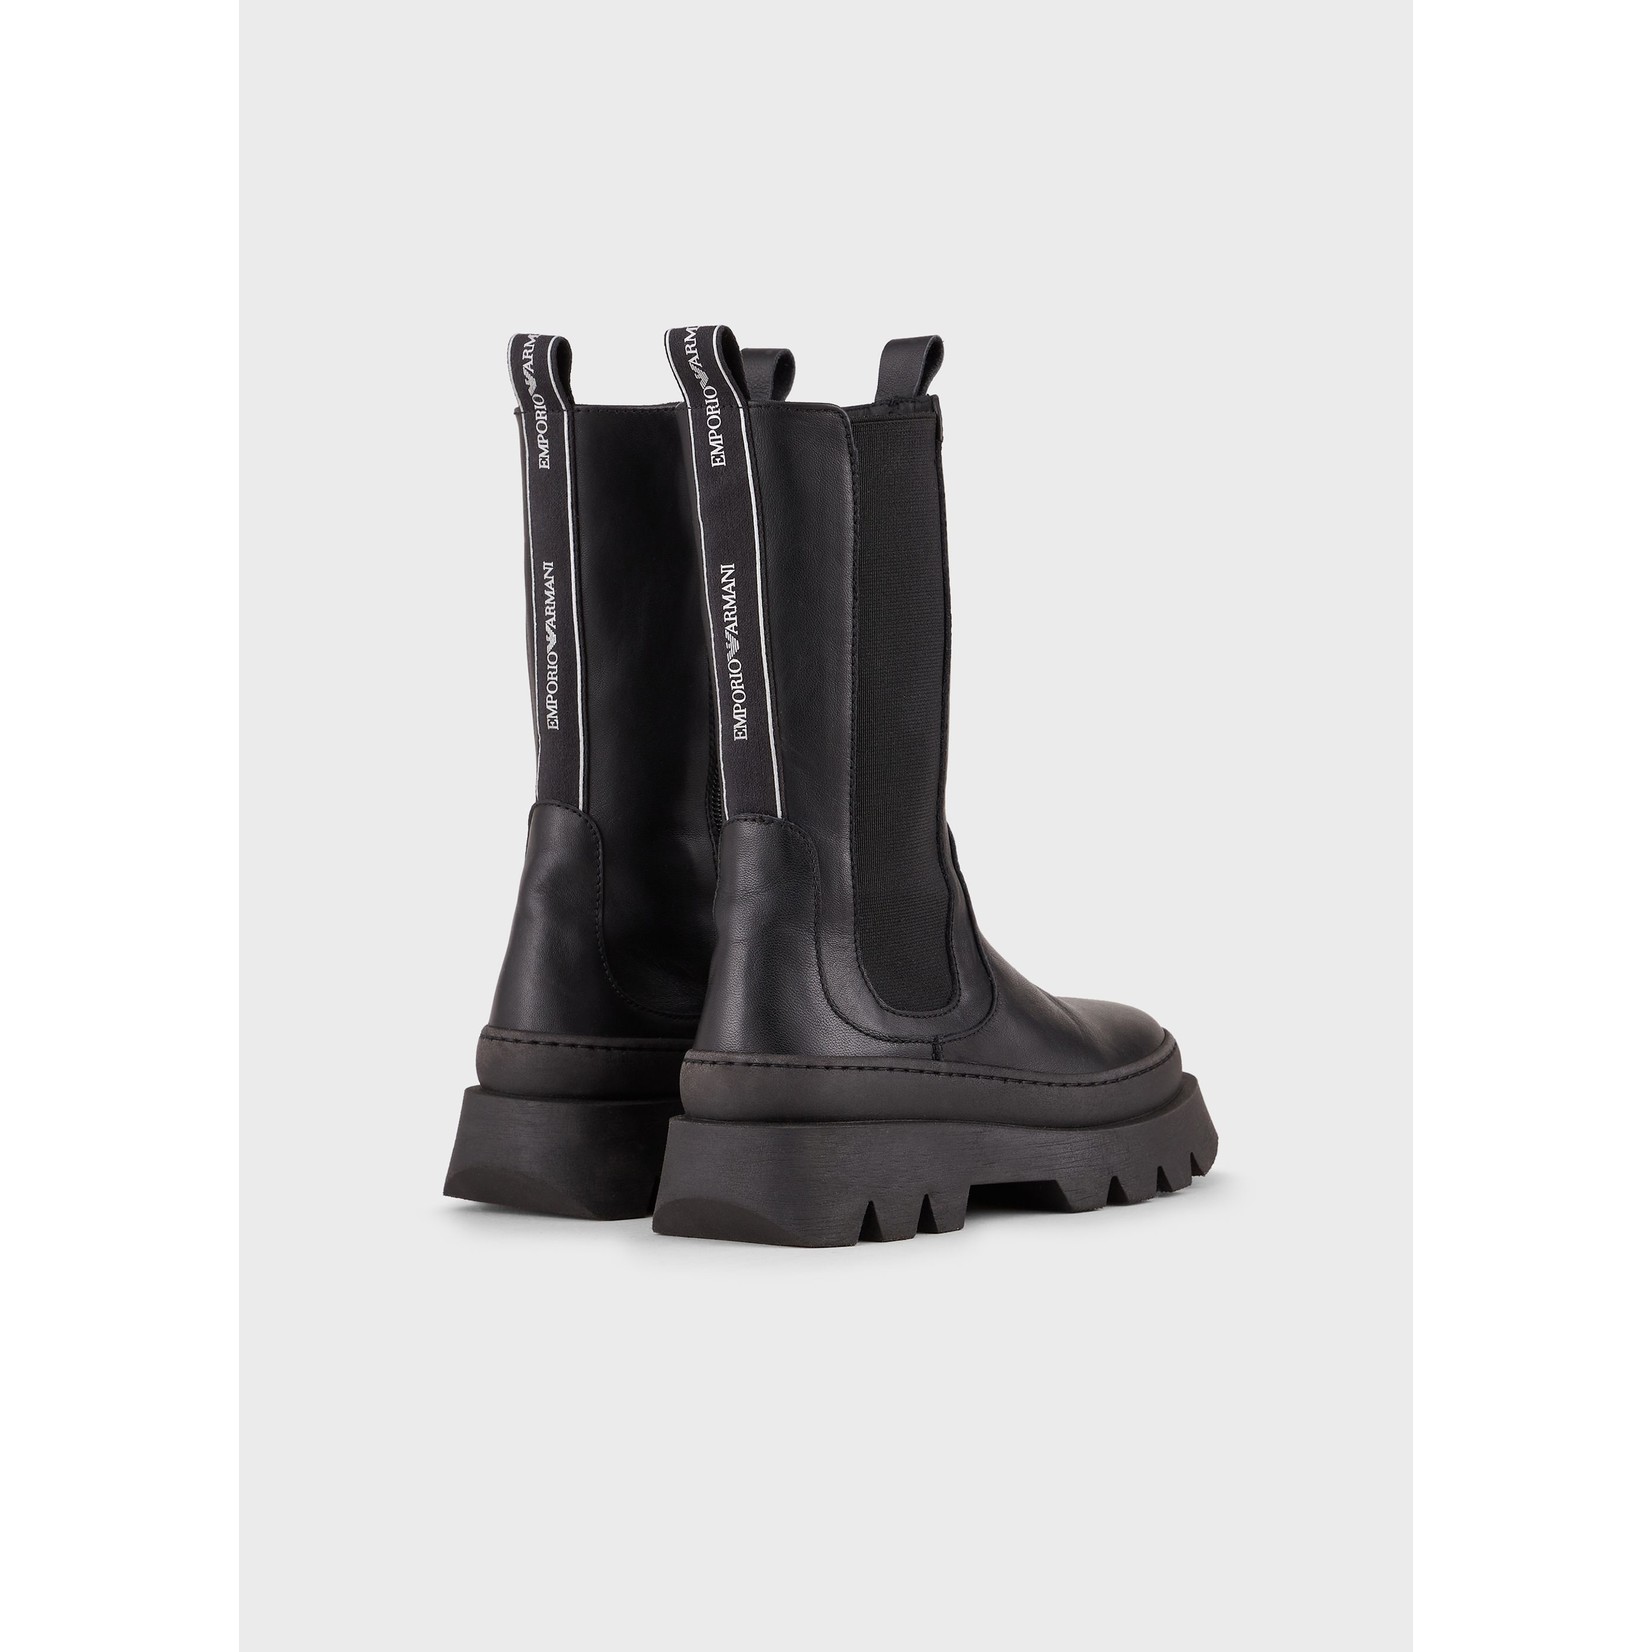 Emporio Armani Emporio Armani - Leather ankle boots with elastic inserts